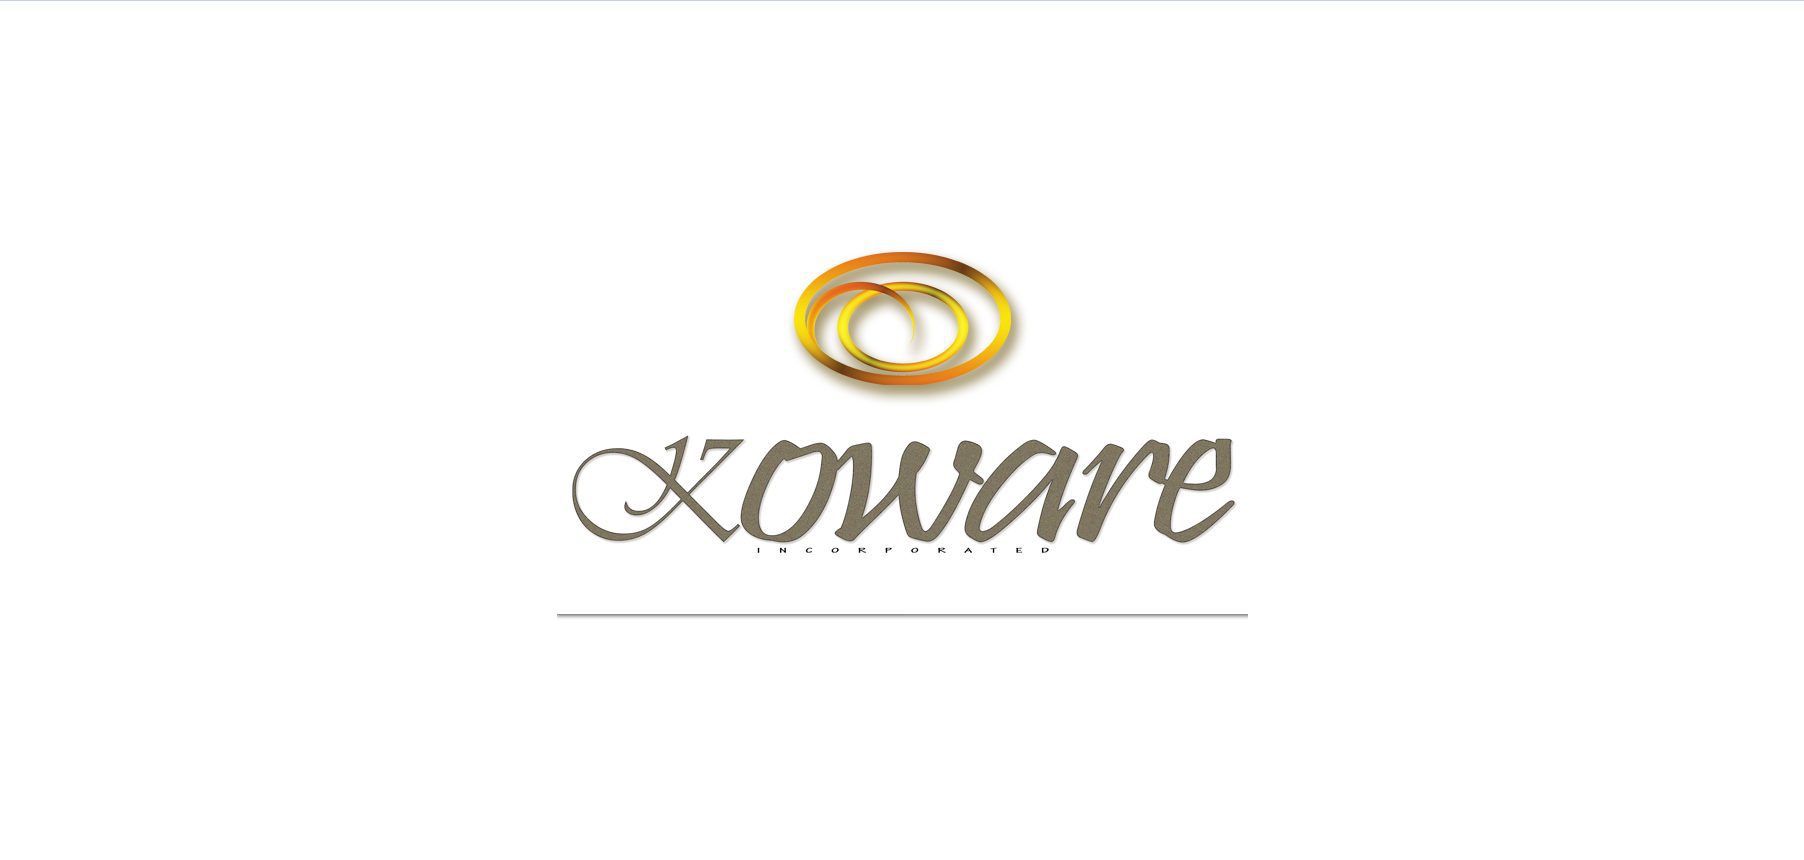 Koware Incorporated